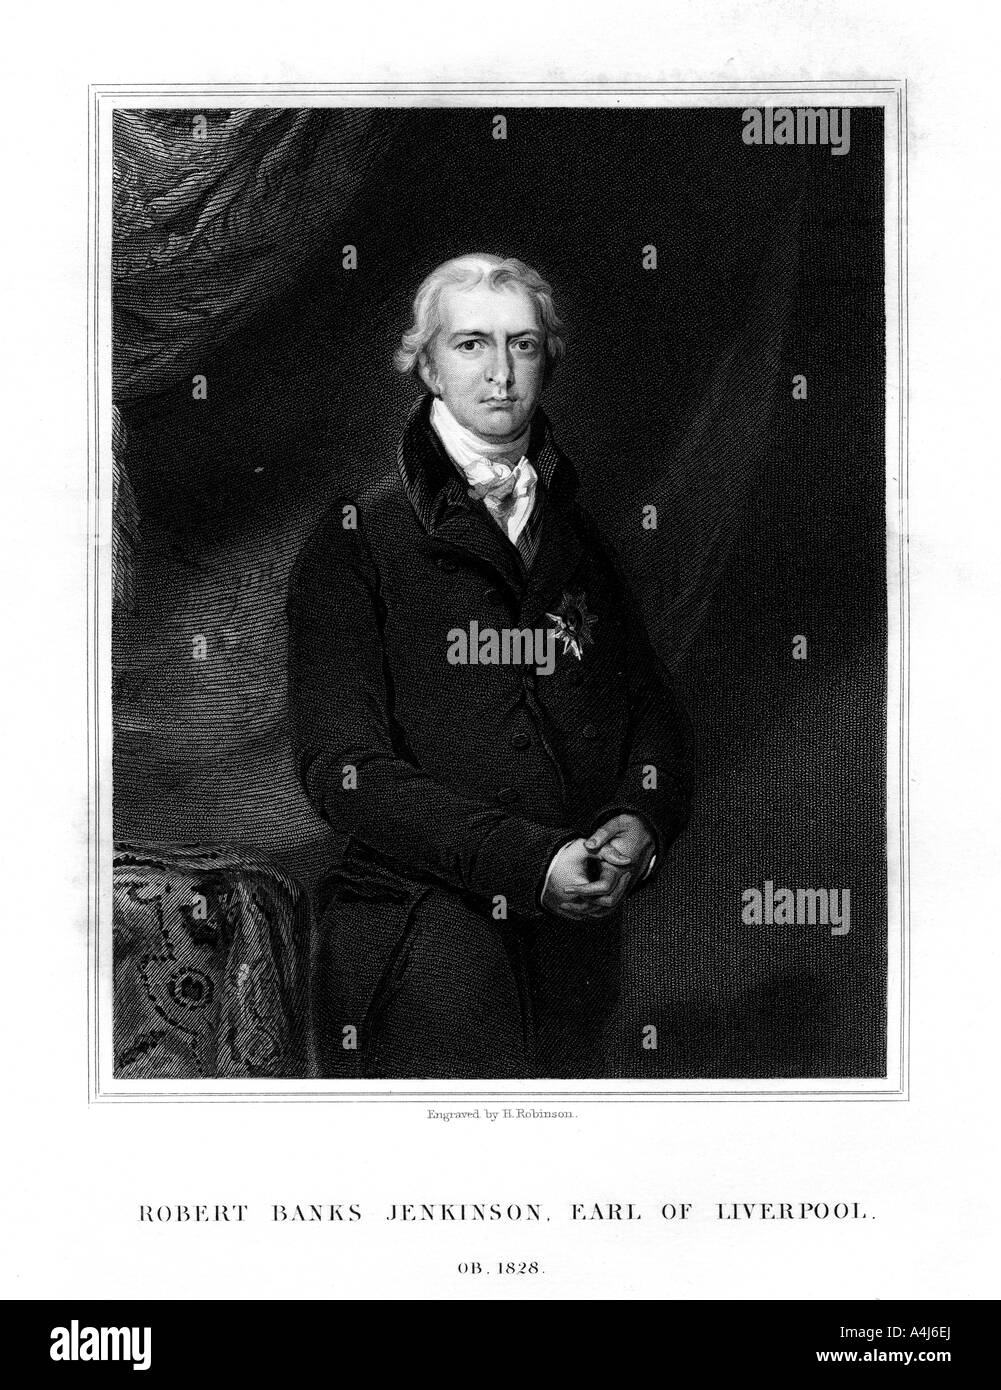 Robert Banks Jenkinson, segundo Conde de Liverpool, Primer Ministro del Reino Unido, (1834).Artista: H Robinson Foto de stock